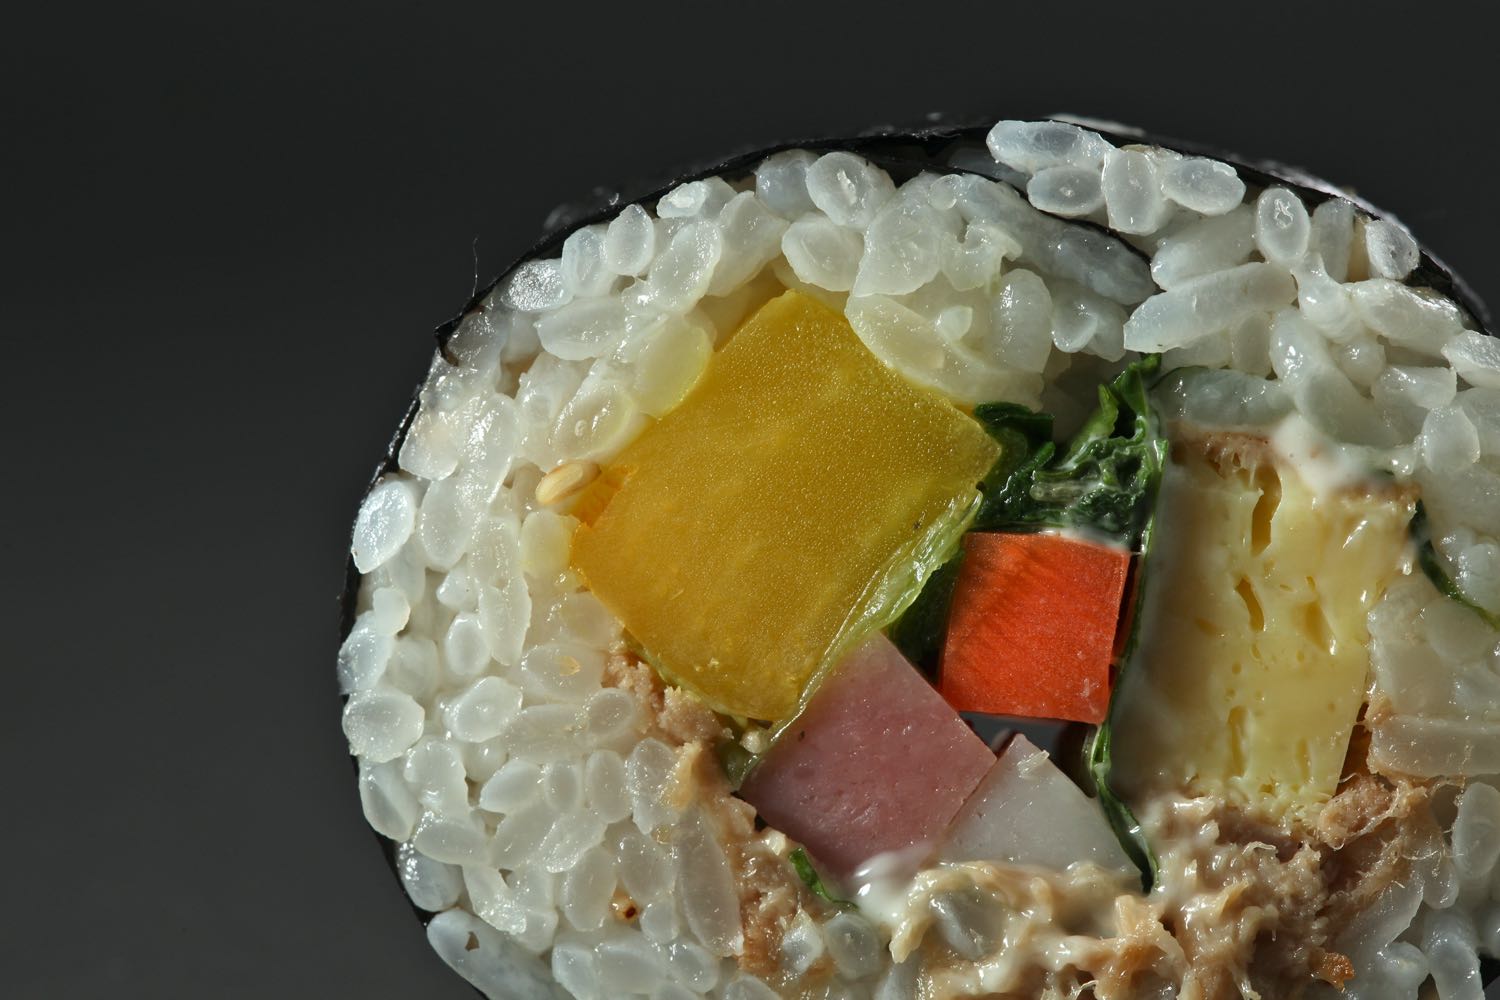 close-ups are an artistic creative food photography idea